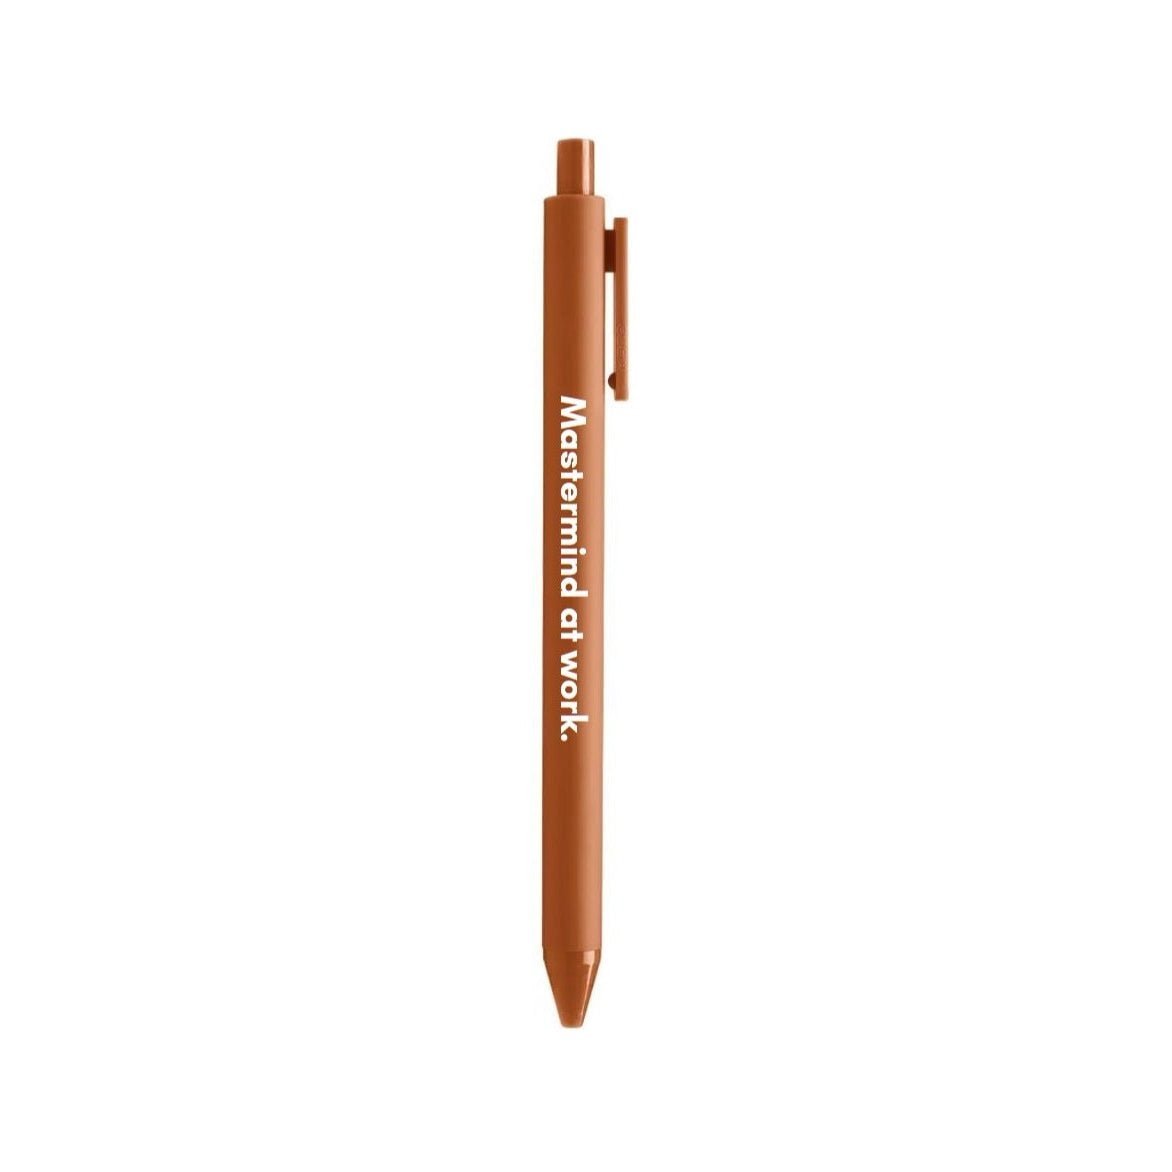 Mastermind At Work Pen 🏆 | Gel Click Pen in Caramel | Set of 30